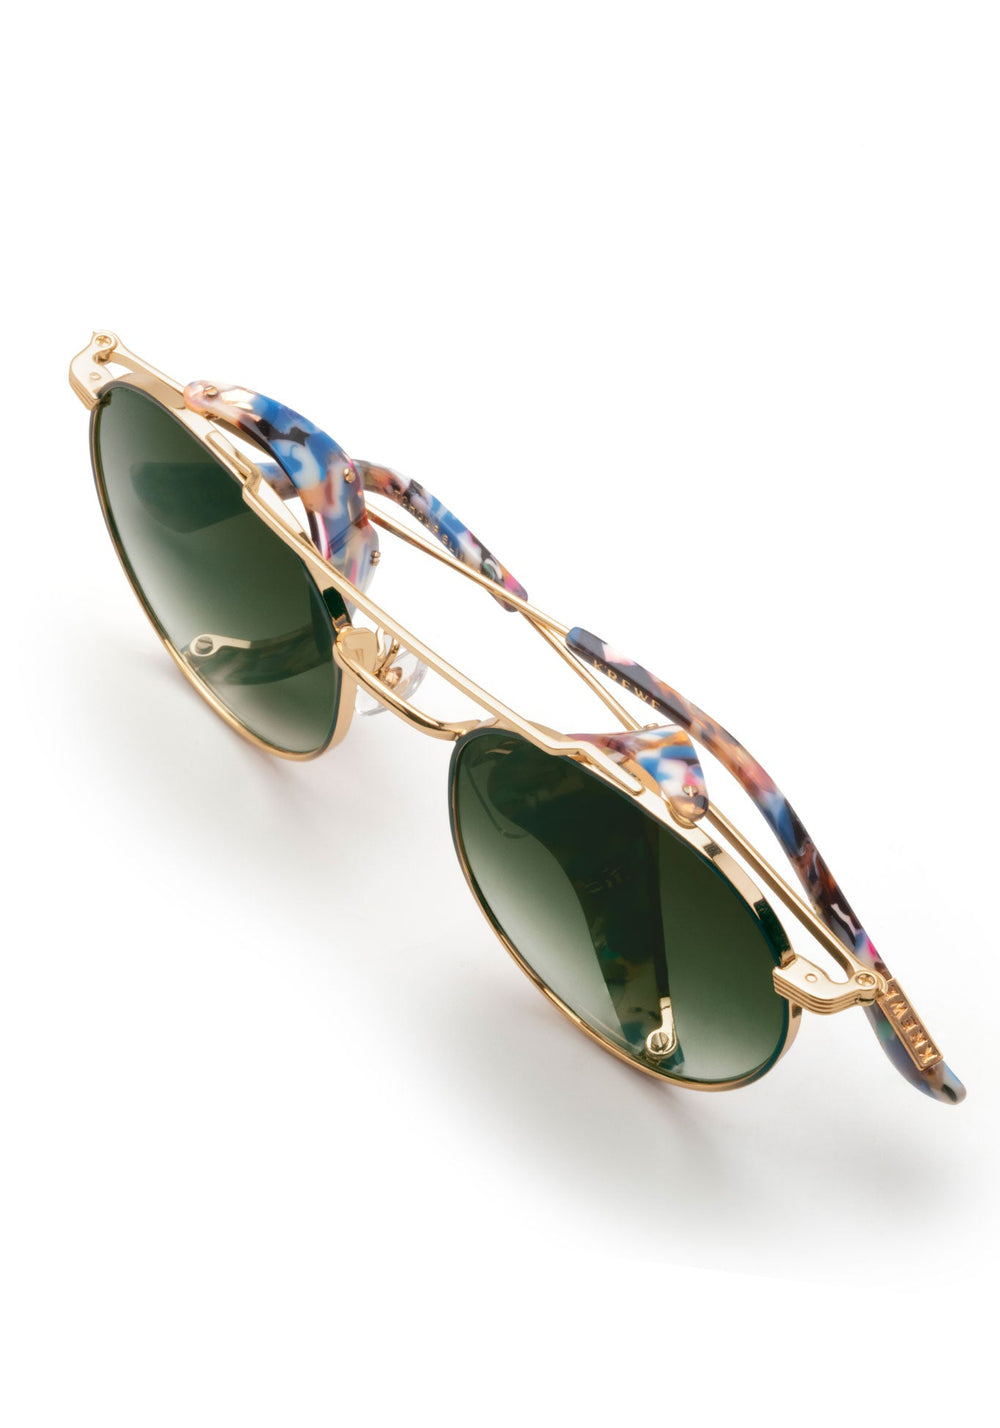 TCHOUP BLINKER | Matte Indigo + 24K Santorini Handcrafted, luxury metal KREWE sunglasses